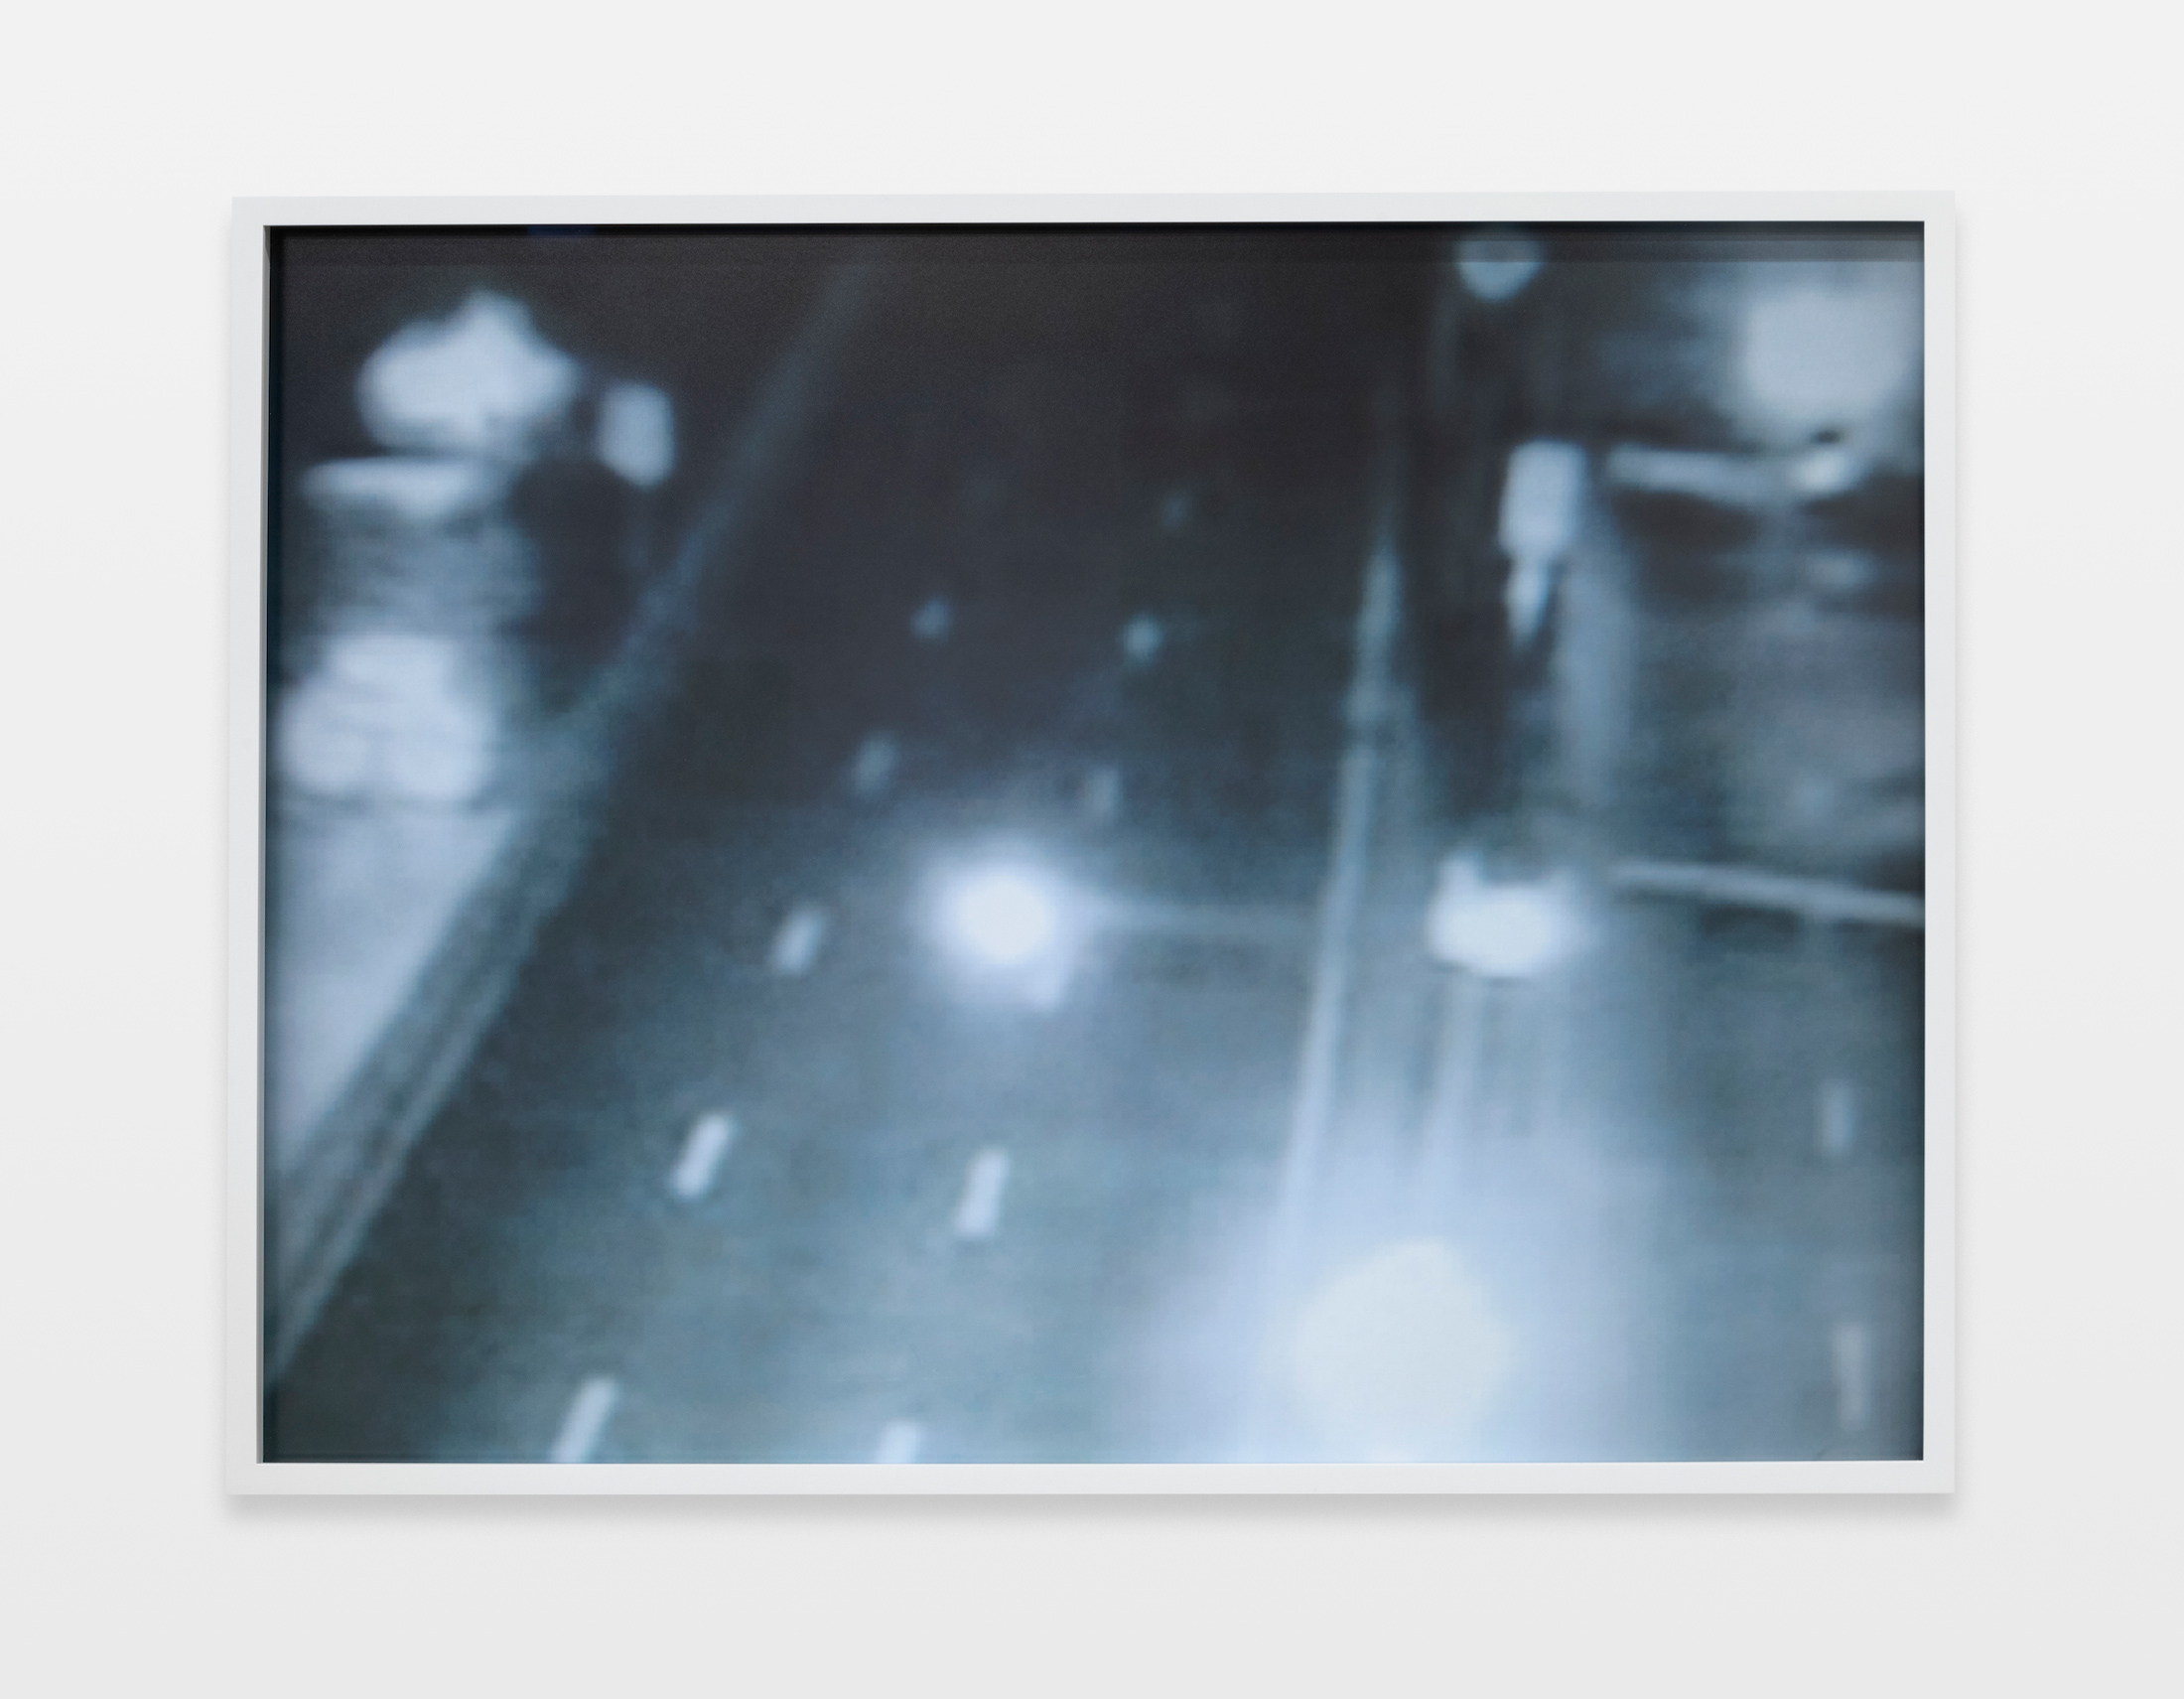 Barbara Ess, Traffic [Remote Series], 2011, archival pigment print, 24h x 31.94w in.